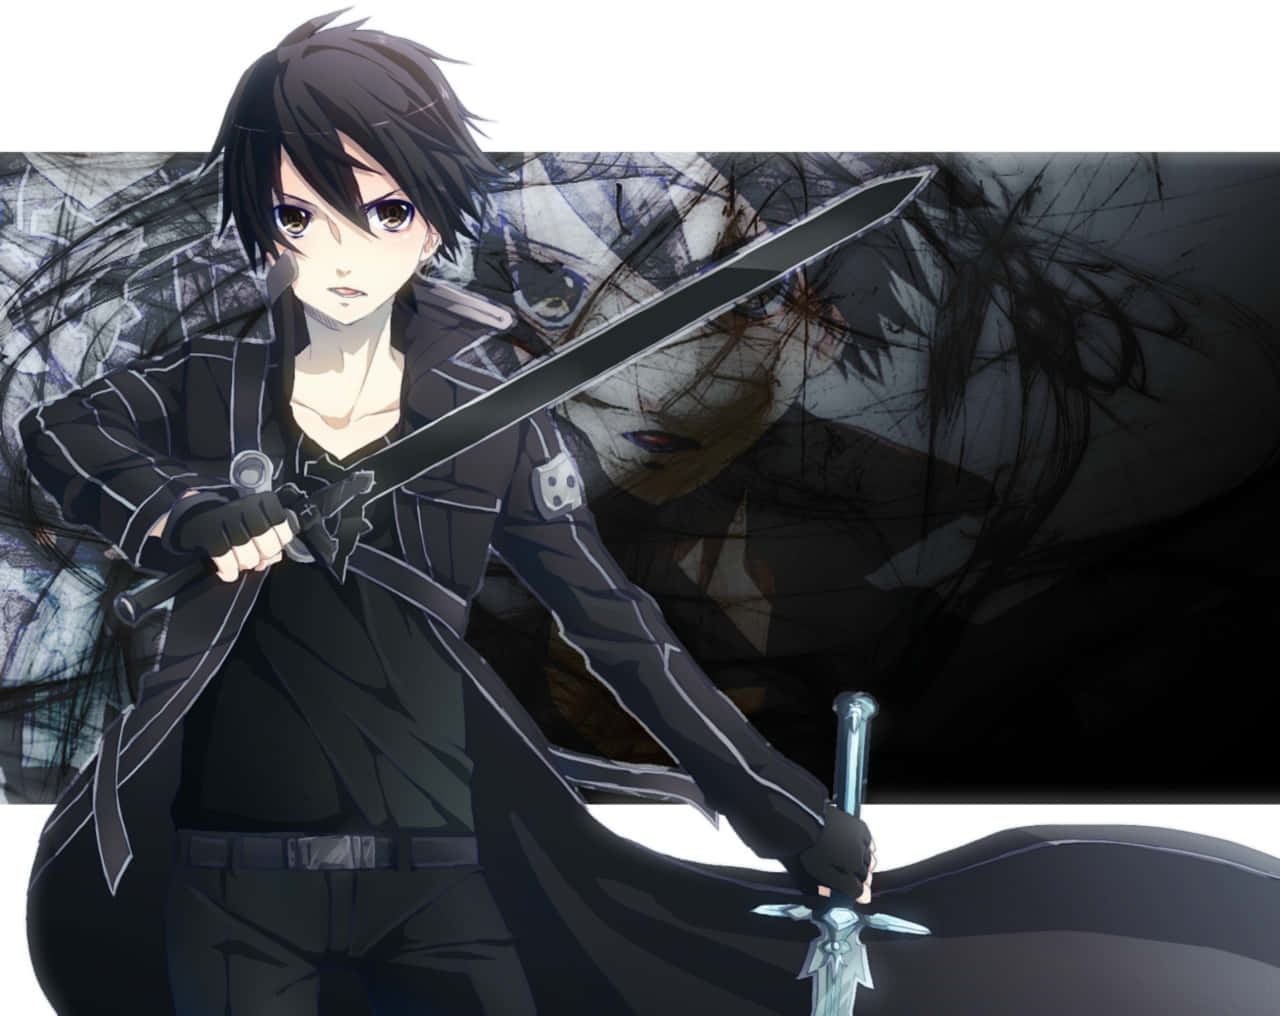 Kazuto Kirigaya (Kirito) ready for battle in Sword Art Online Wallpaper